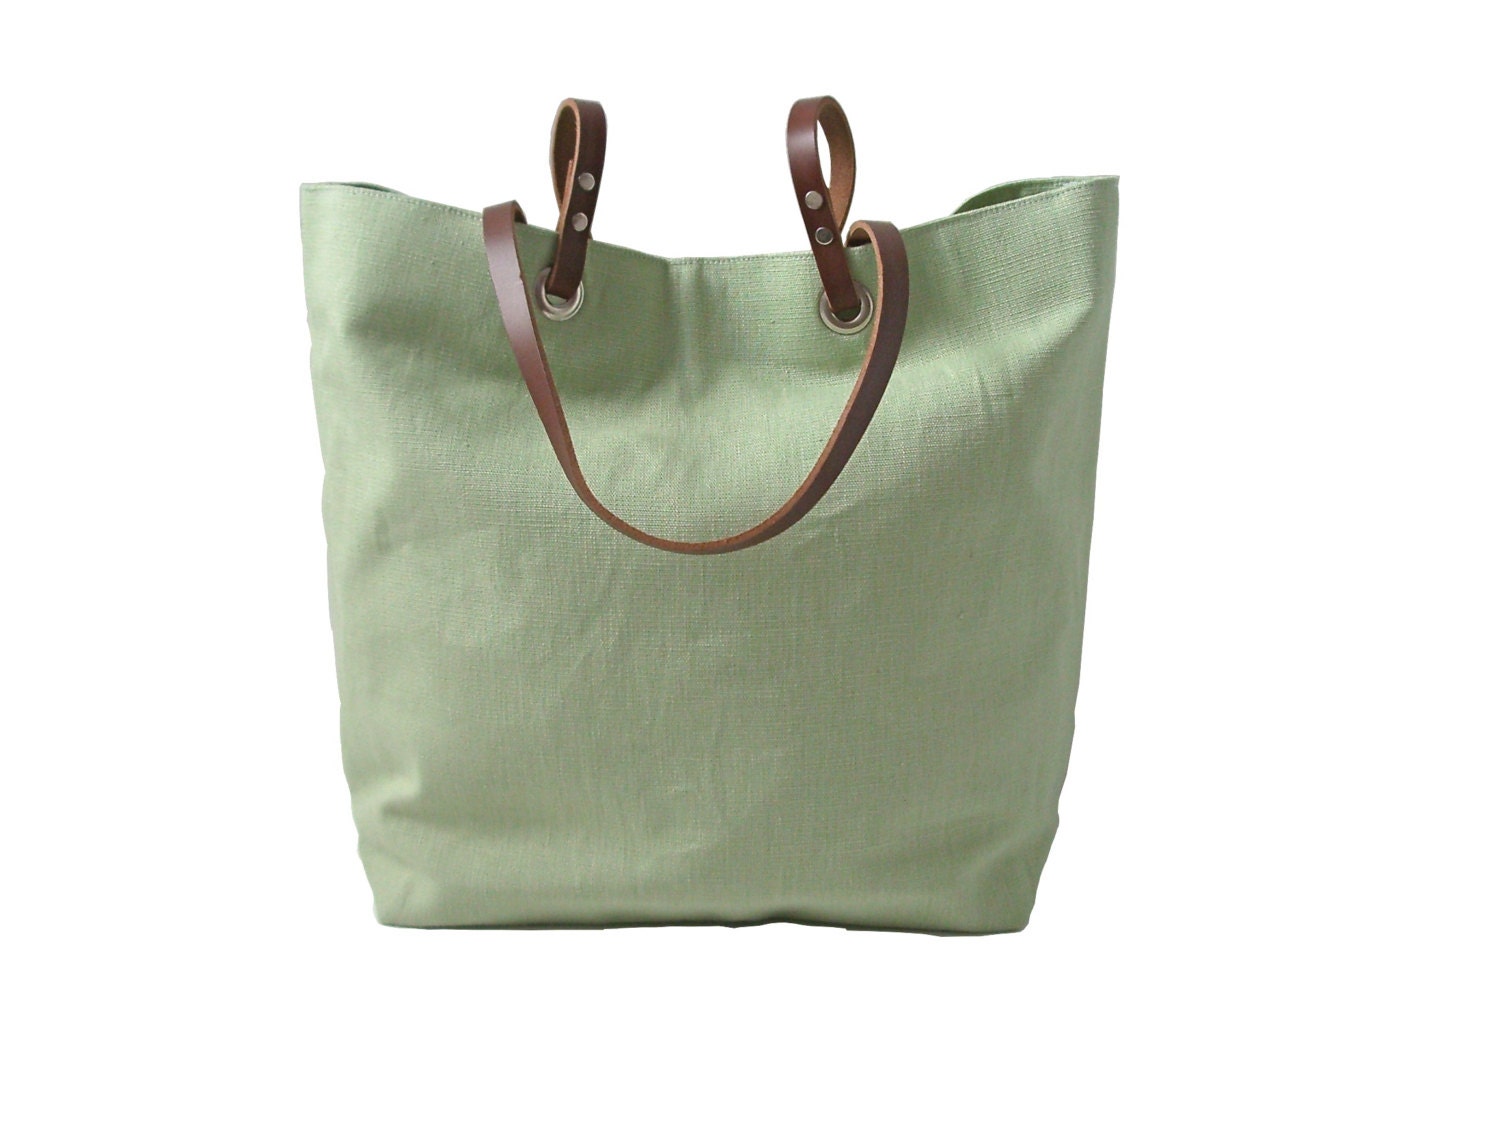 Pistachio Green Tote Bag, Spring Handbag,  Mint Green, Linen and Leather Handbag for Women